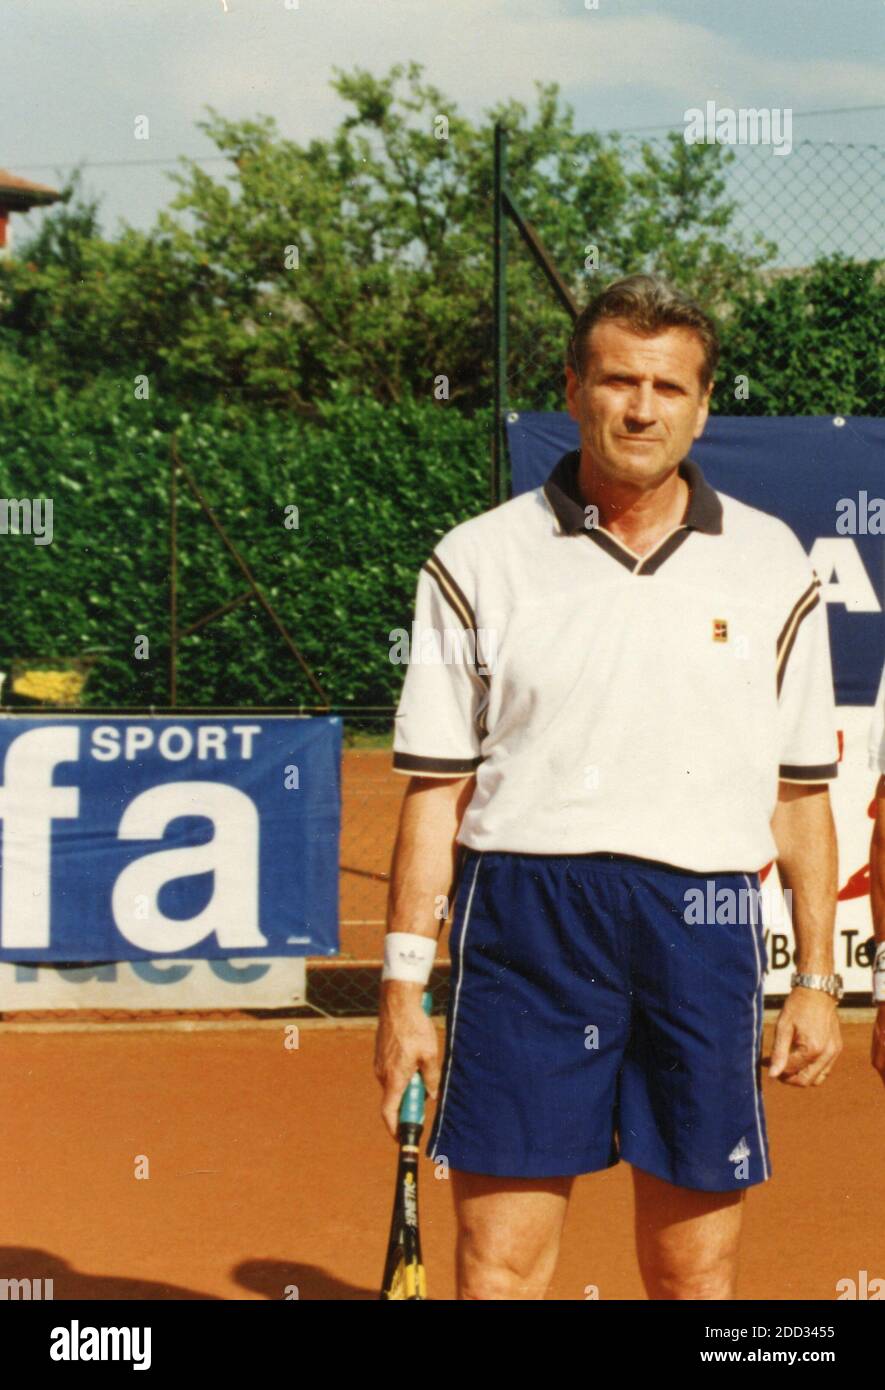 Italian football player Giacinto Facchetti playing tennis, 1990s Stock Photo